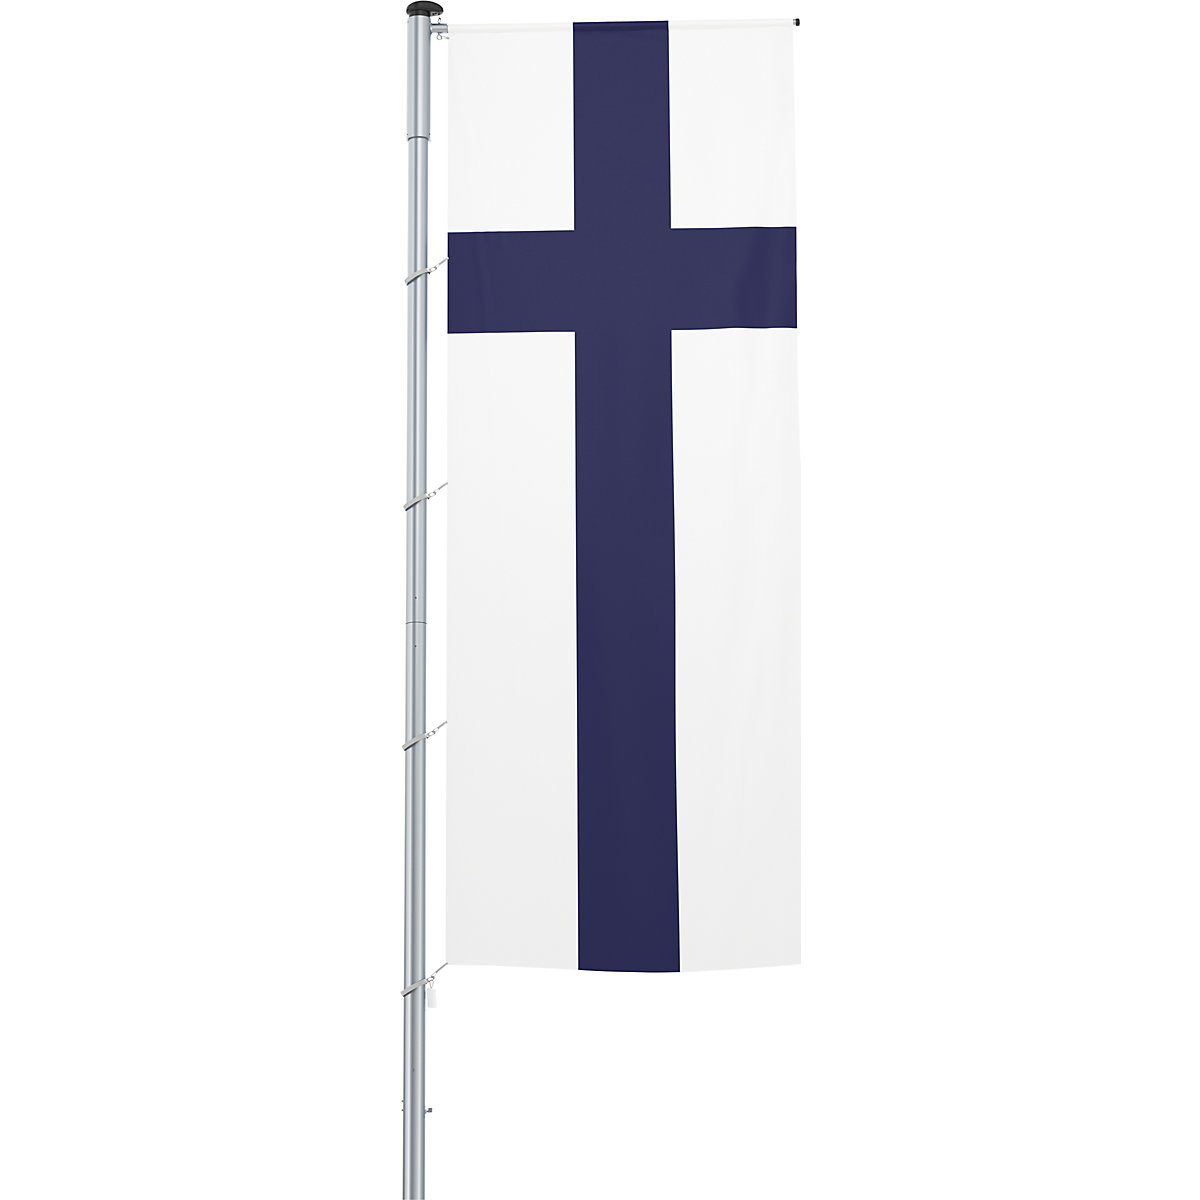 Steag pentru braț/drapel național – Mannus, format 1,2 x 3 m, Finlanda-11